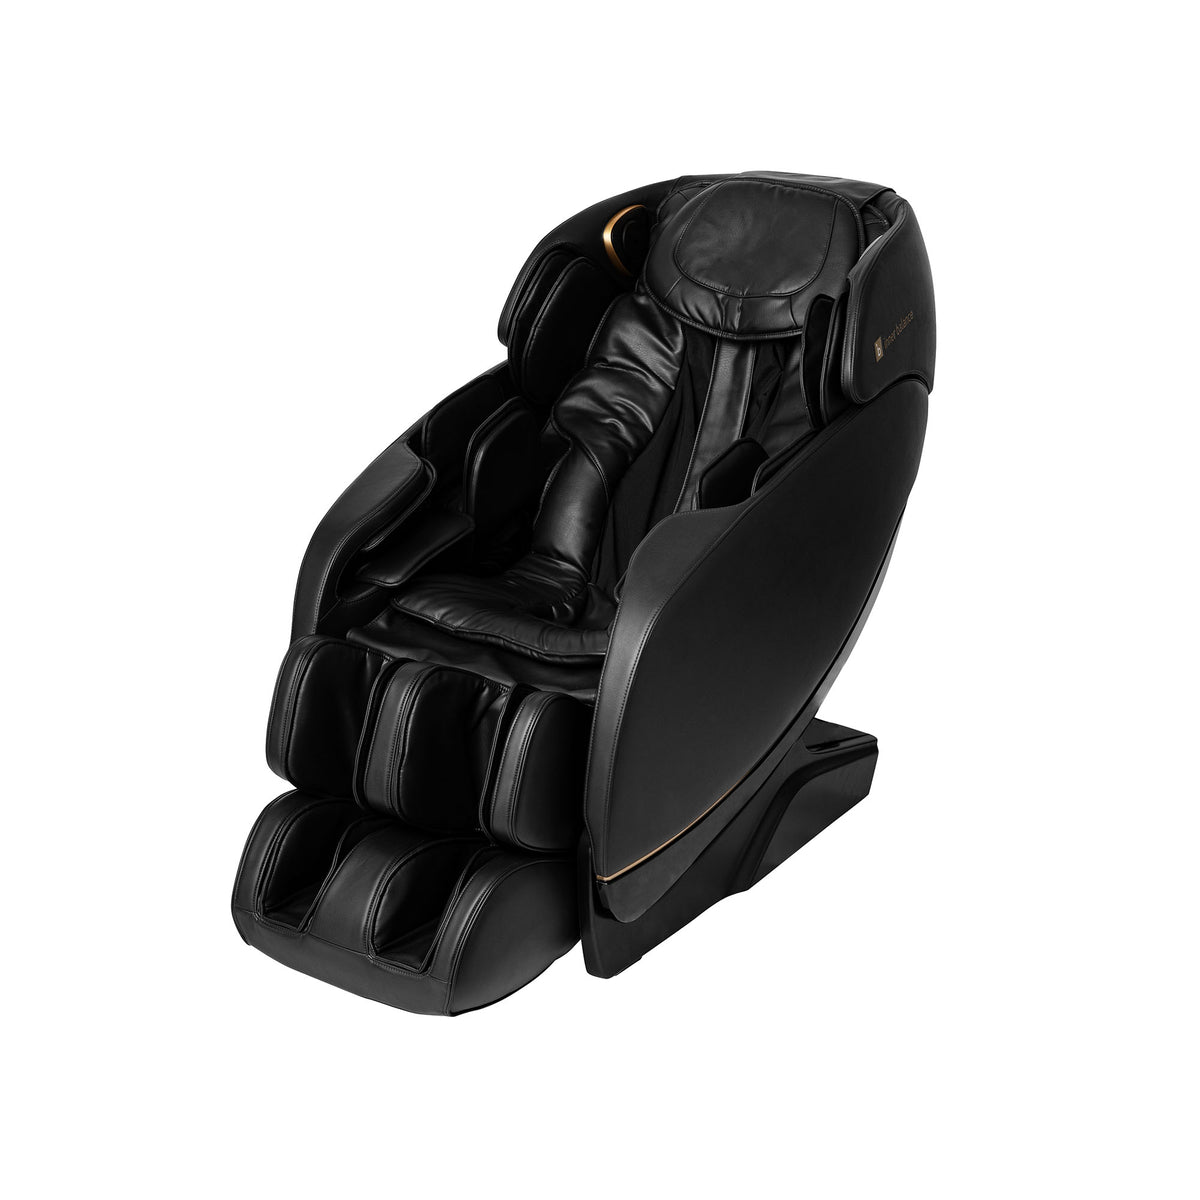 CirC Premium SL Track Heated Massage Chair